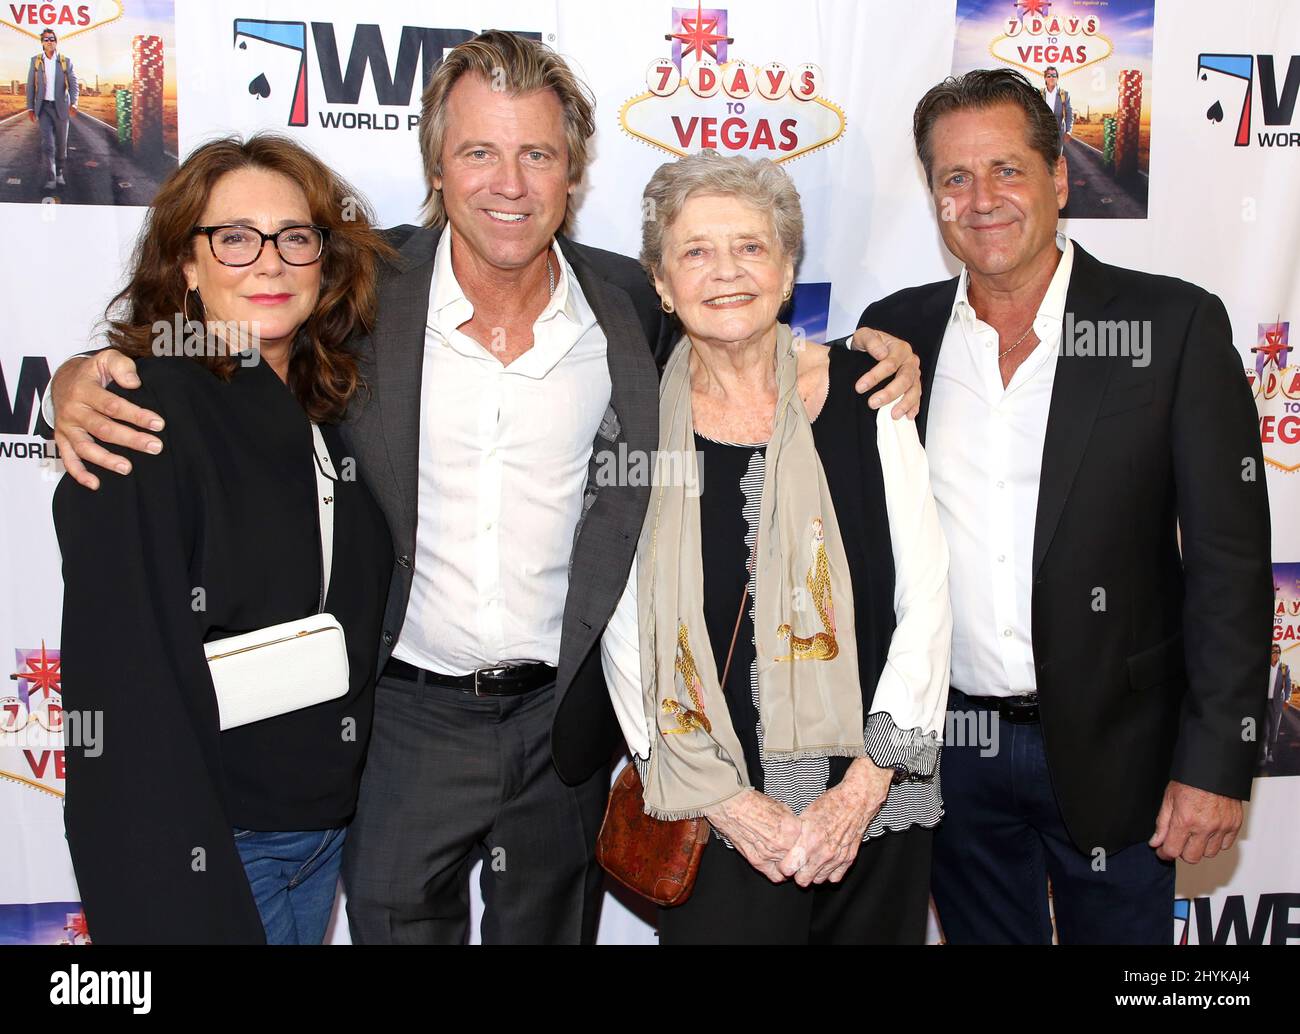 Talia Balsam, Vince Van Patten, Joyce Van Patten & Jimmy Van Patten attending the '7 Days To Vegas' New York Premiere held at Cinema Village Stock Photo